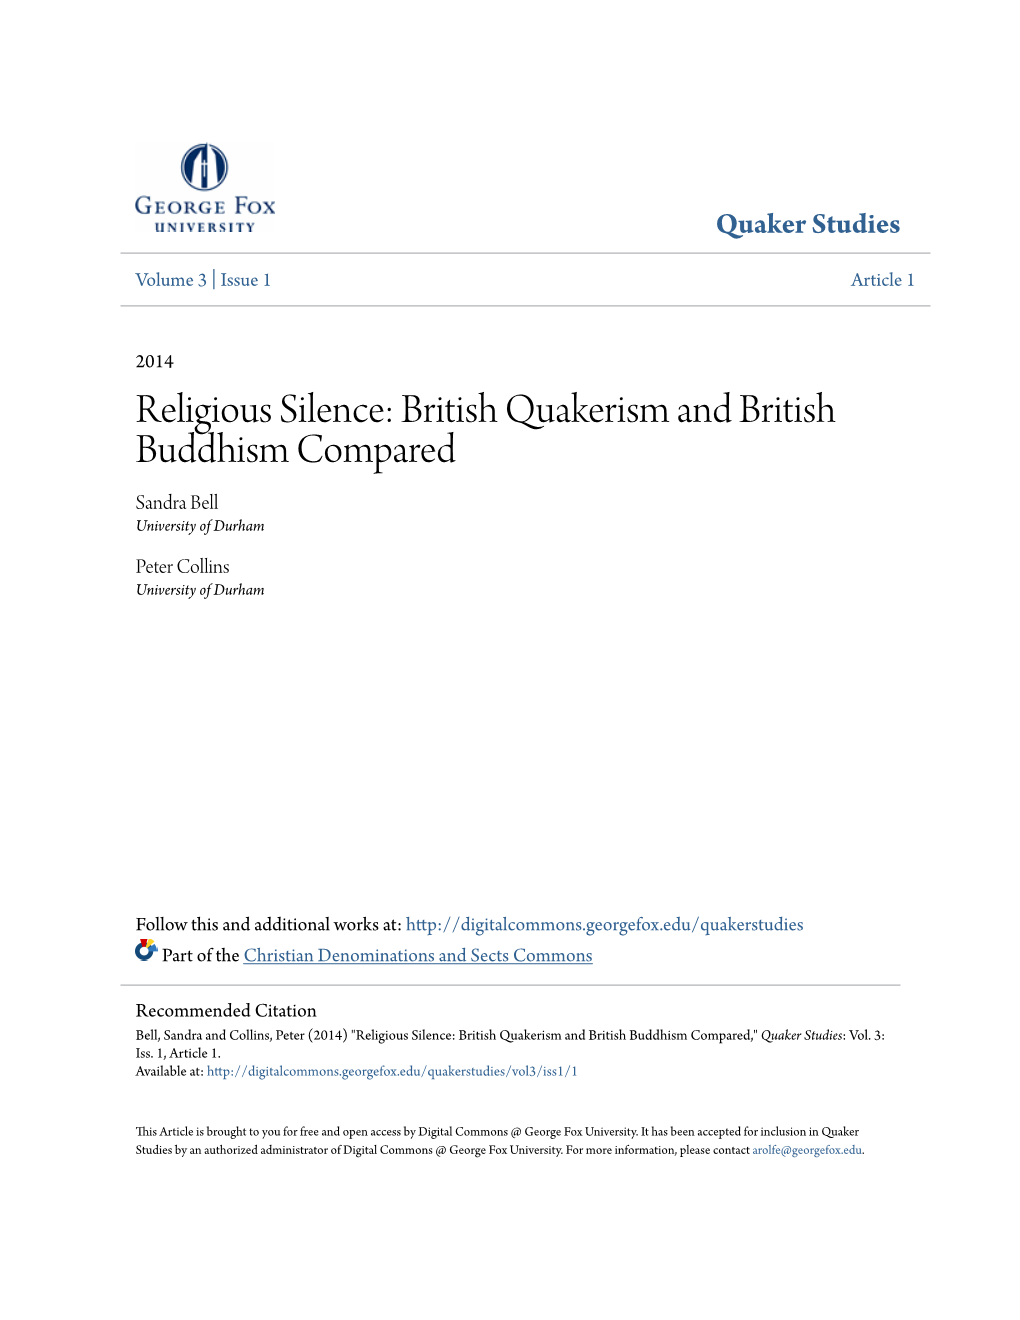 Religious Silence: British Quakerism and British Buddhism Compared Sandra Bell University of Durham